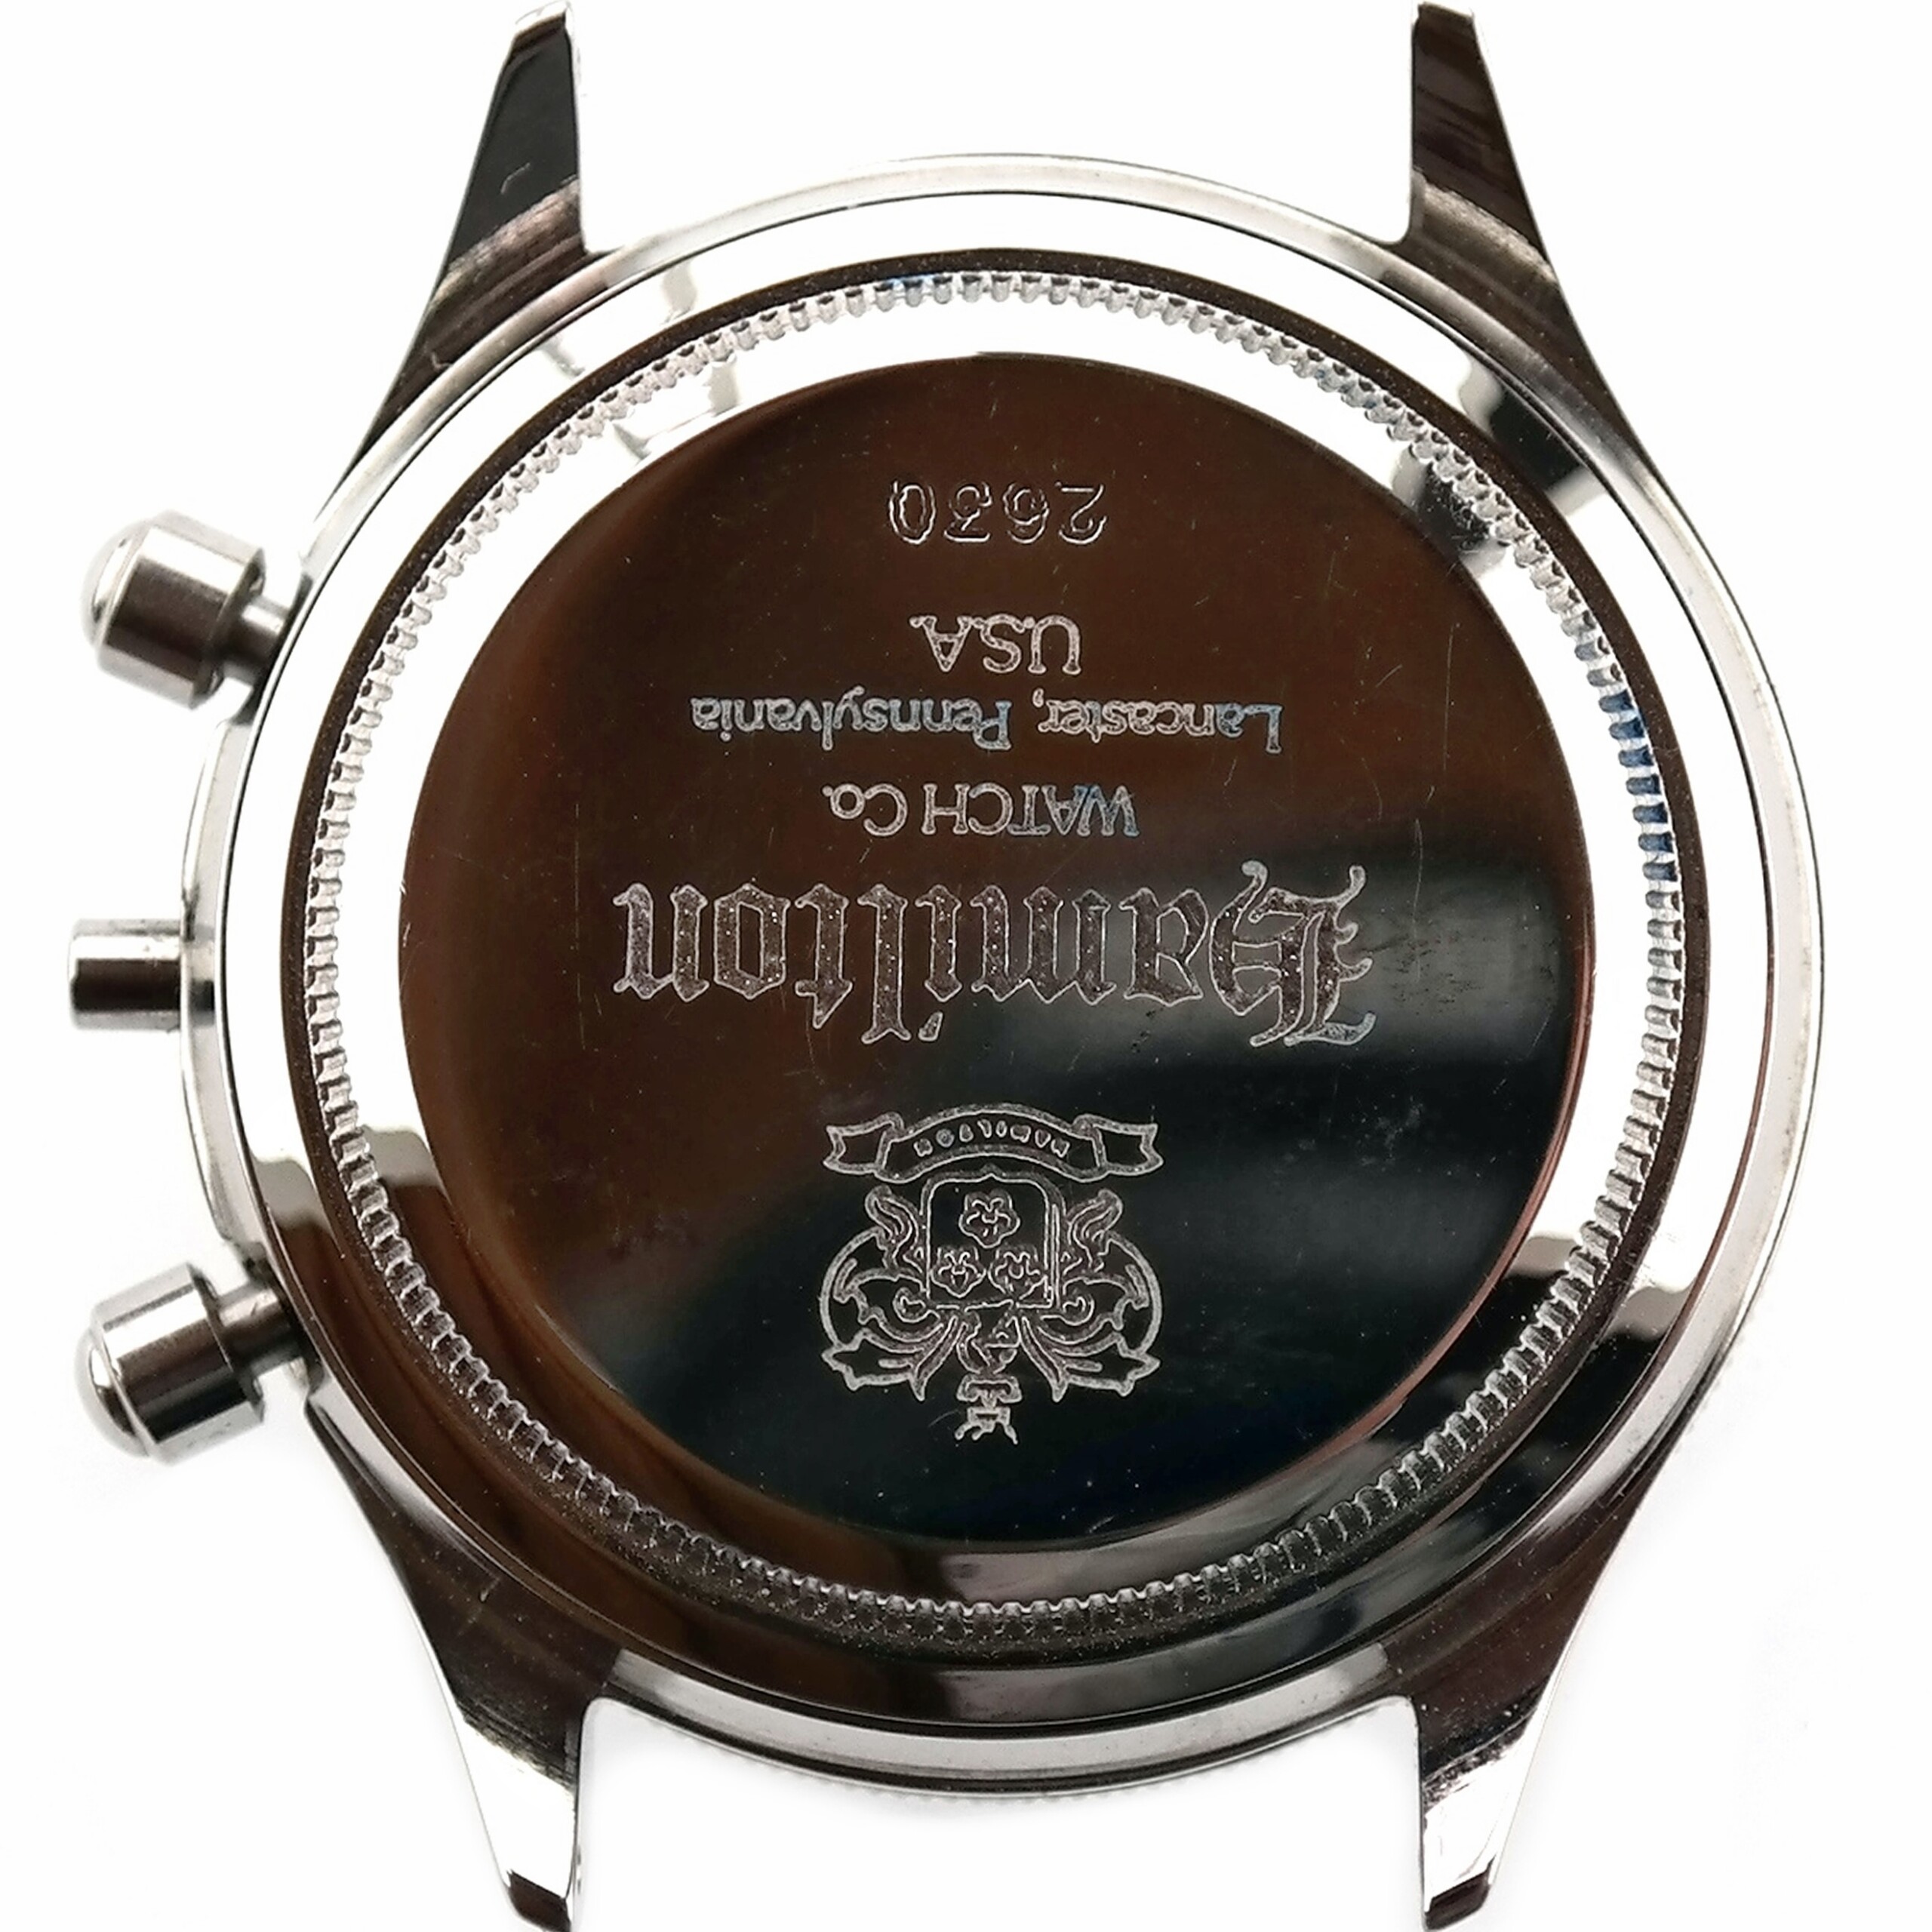 HAMILTON - Chronograph Lemania 1873 - Swiss Made - Watch Case